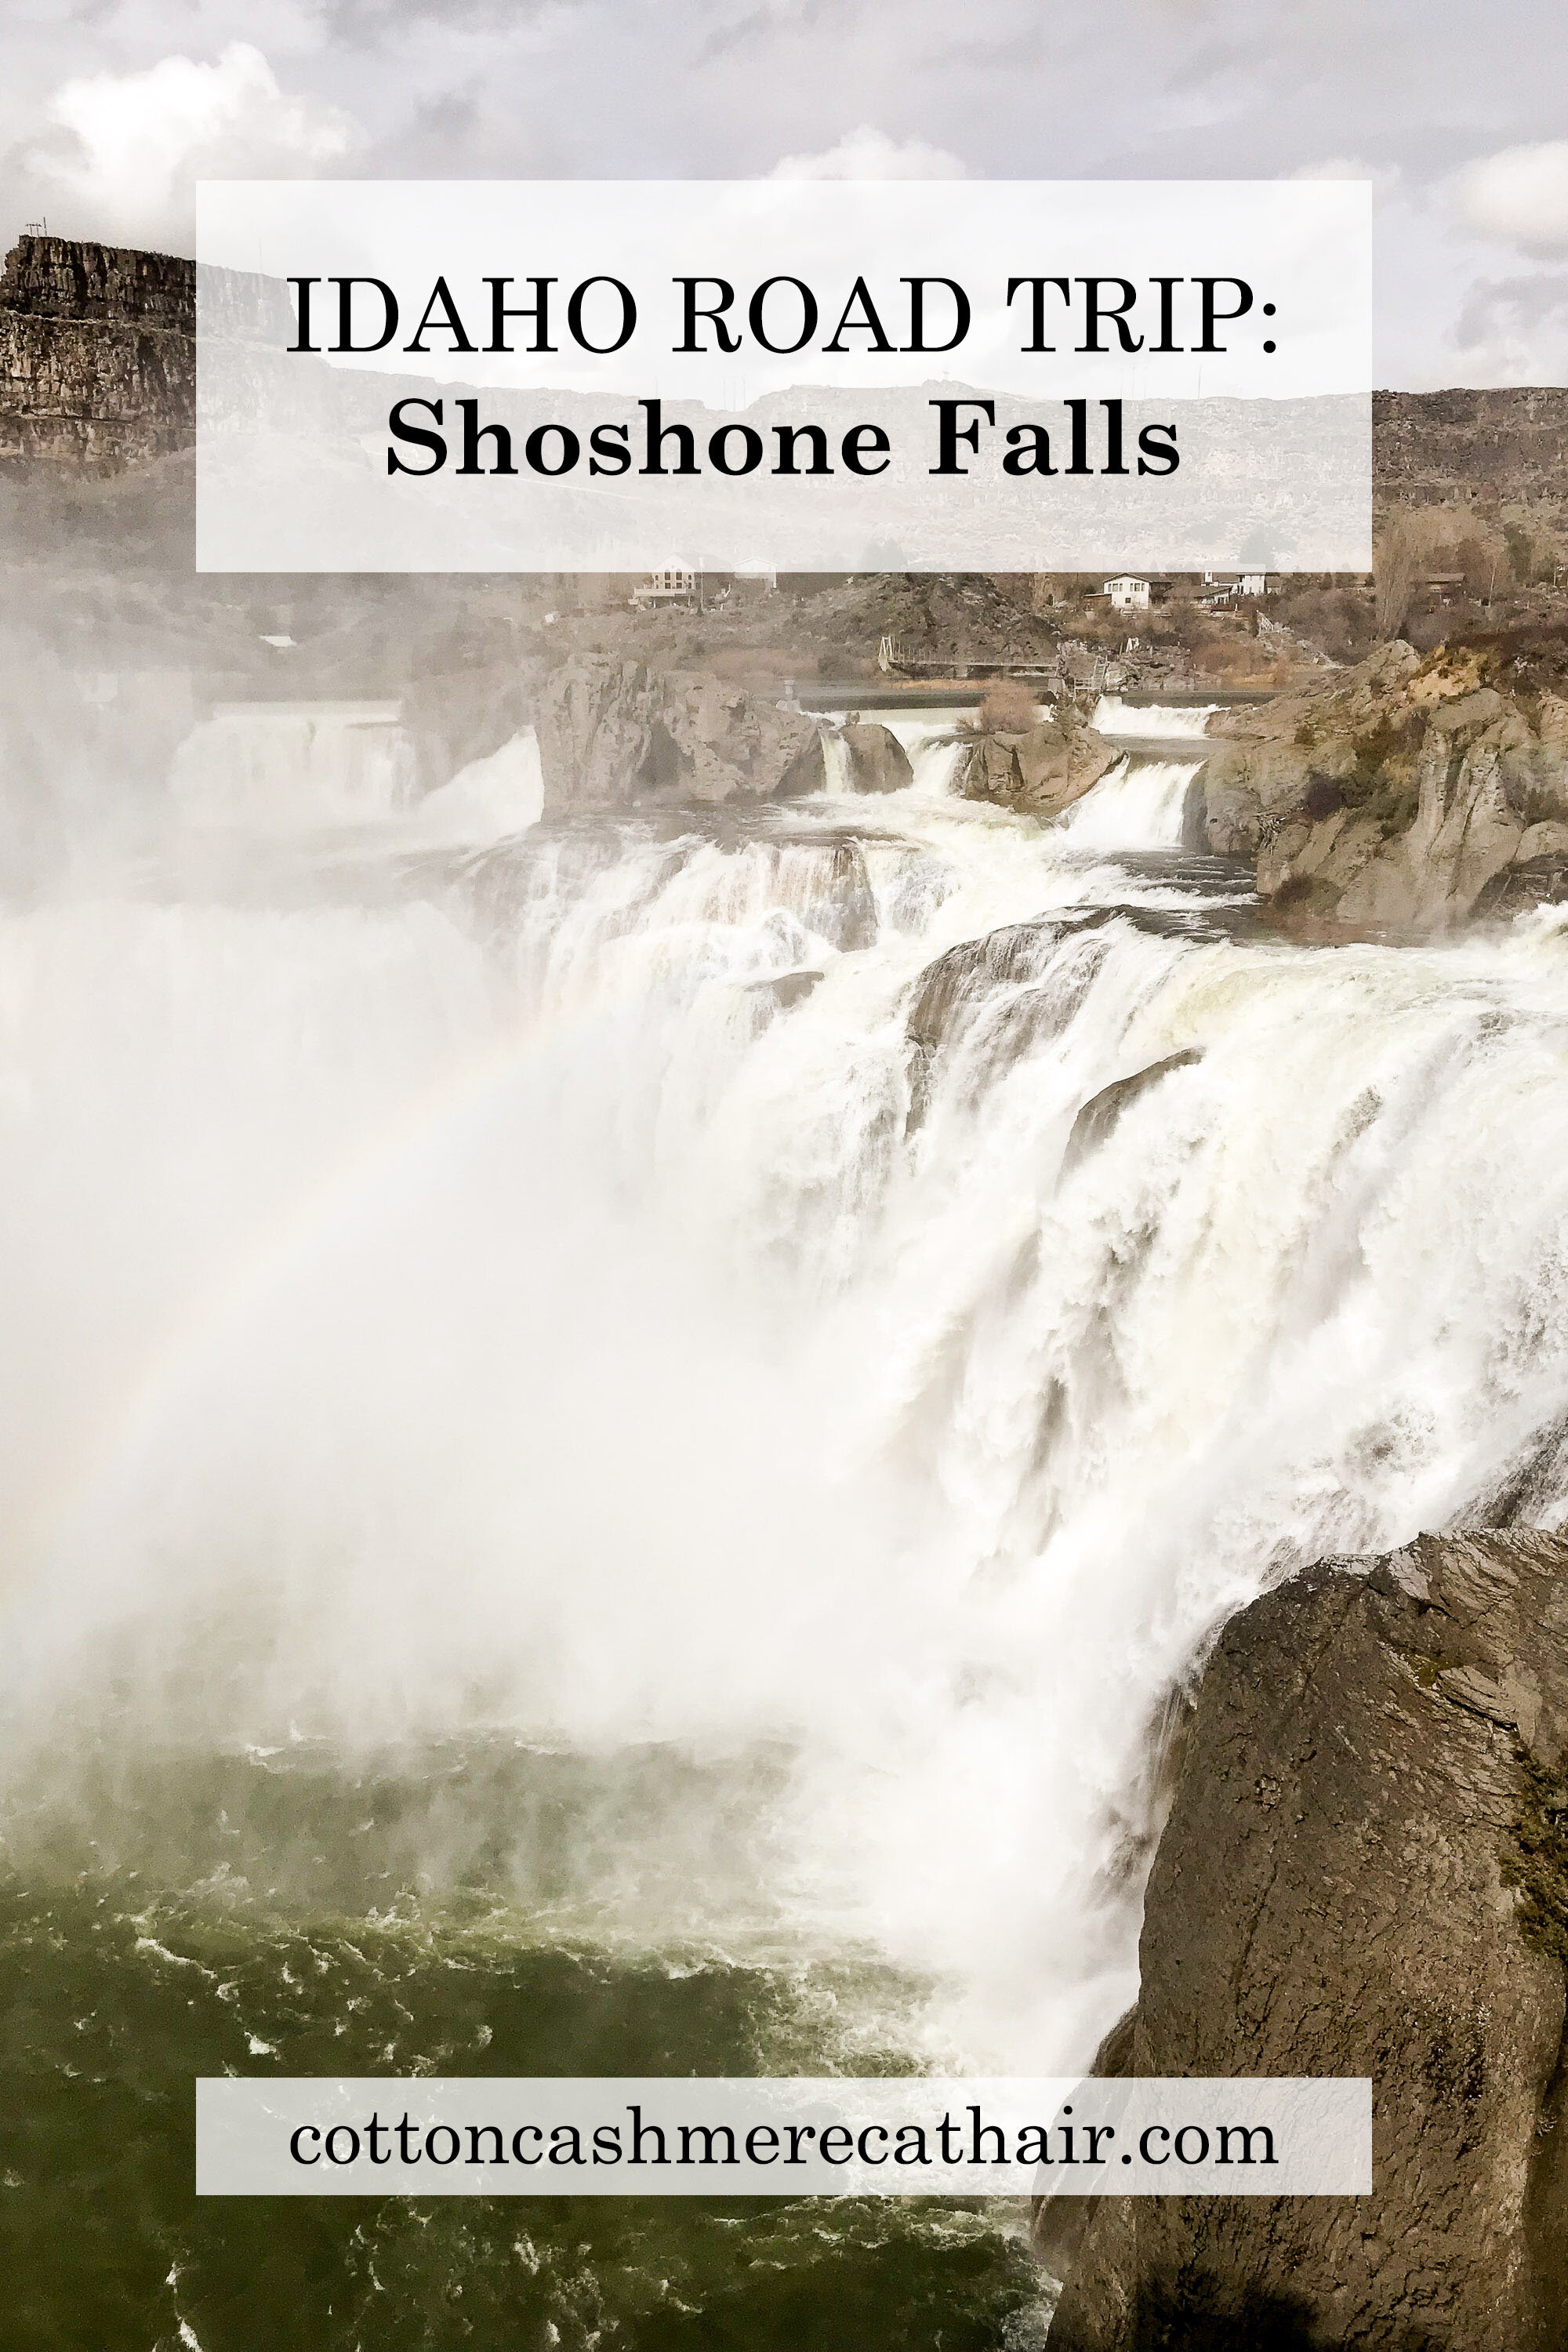 Where to stop on an Idaho road trip: Shoshone Falls